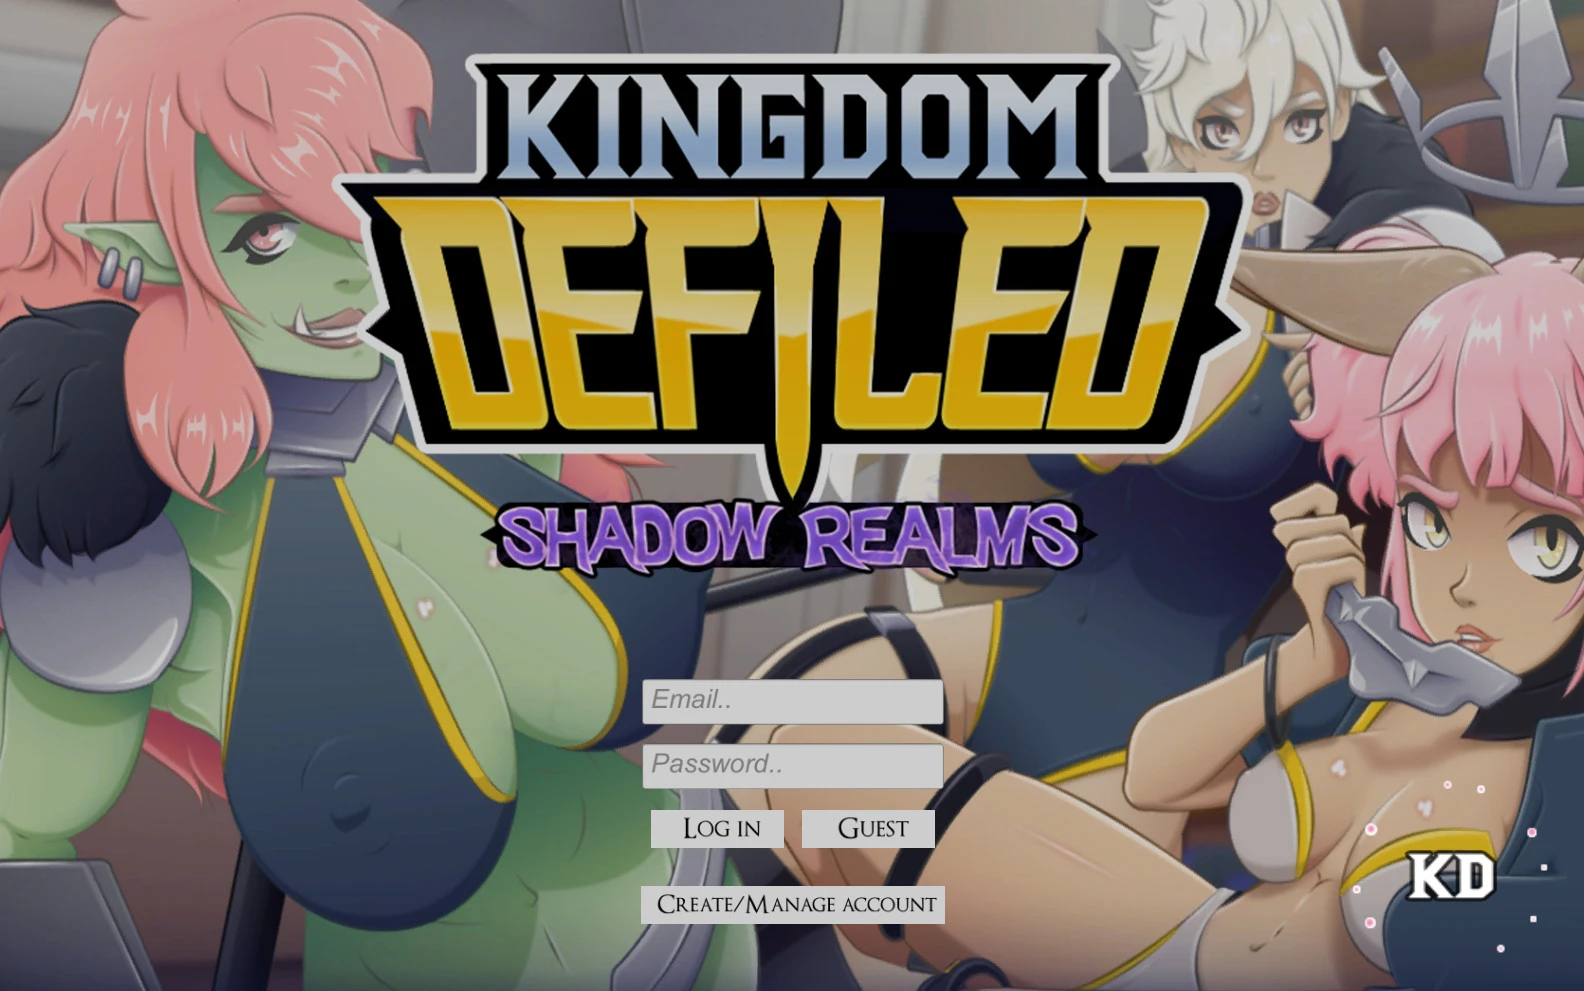 Kingdom Defiled - Shadow Realms main image